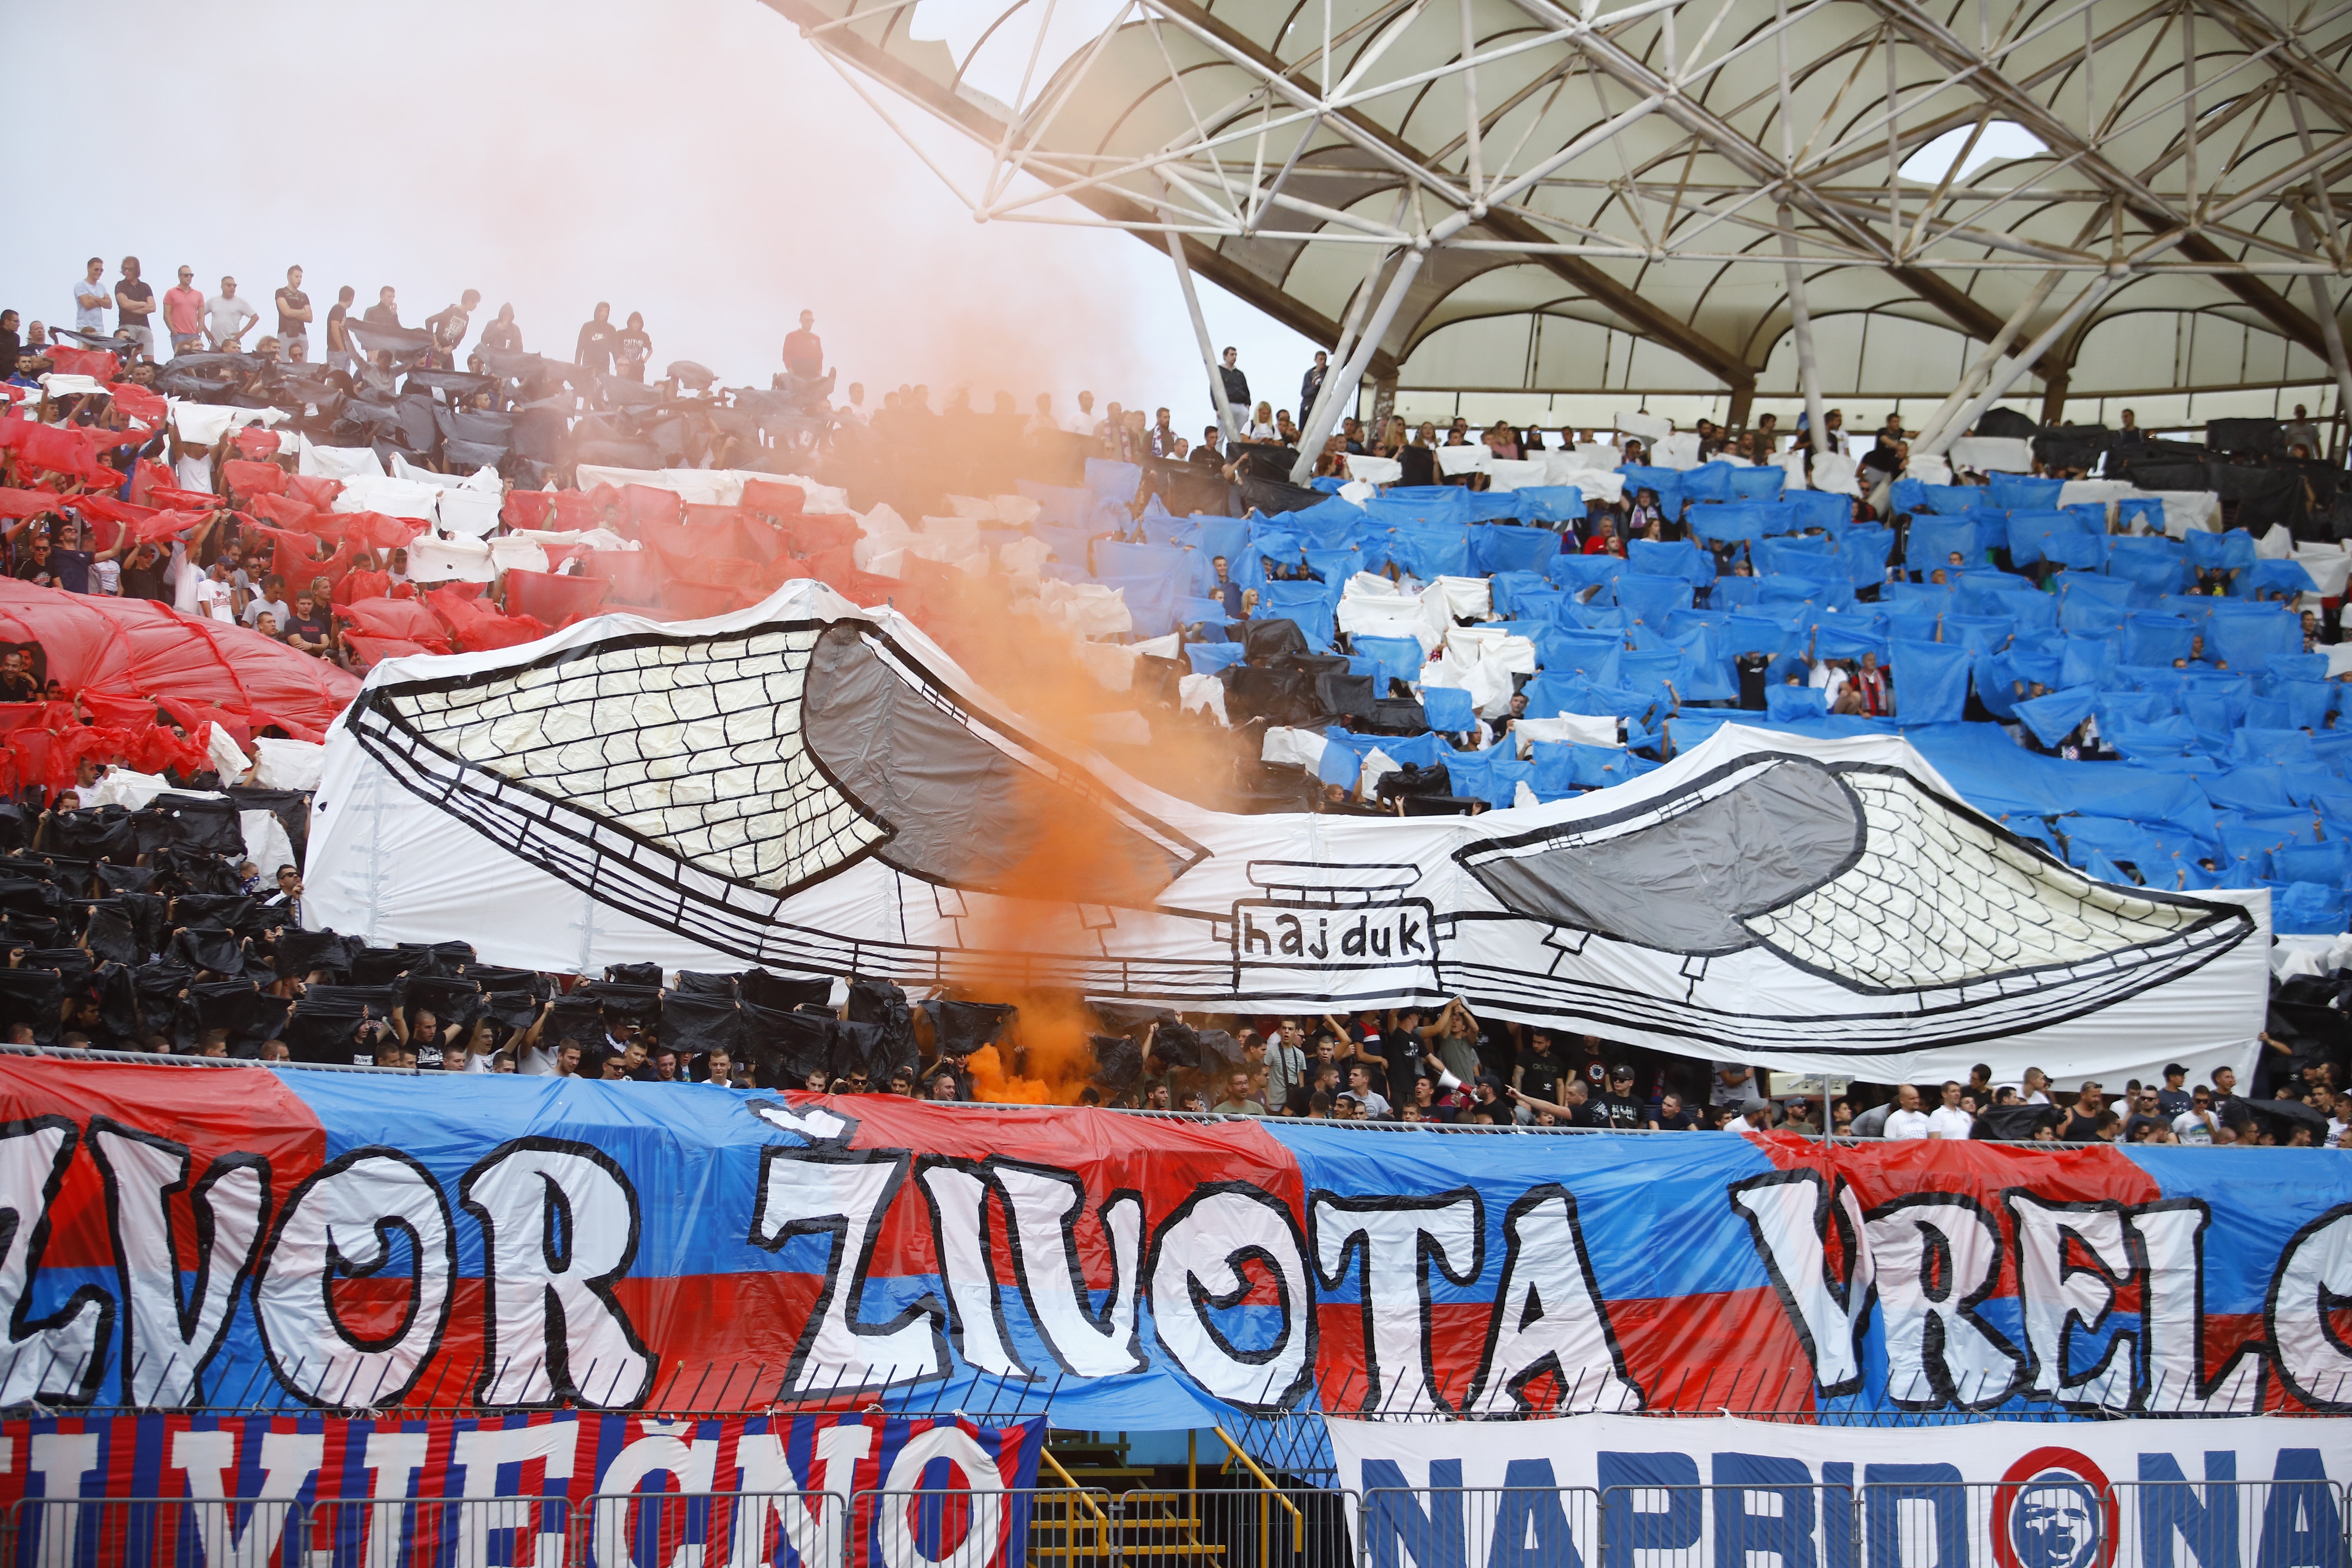 22.09.2019., stadion Poljud, Split - Hrvatski Telekom Prva liga, 9. kolo, HNK Hajduk - NK Inter Zapresic.

Photo: Milan Sabic/PIXSELL